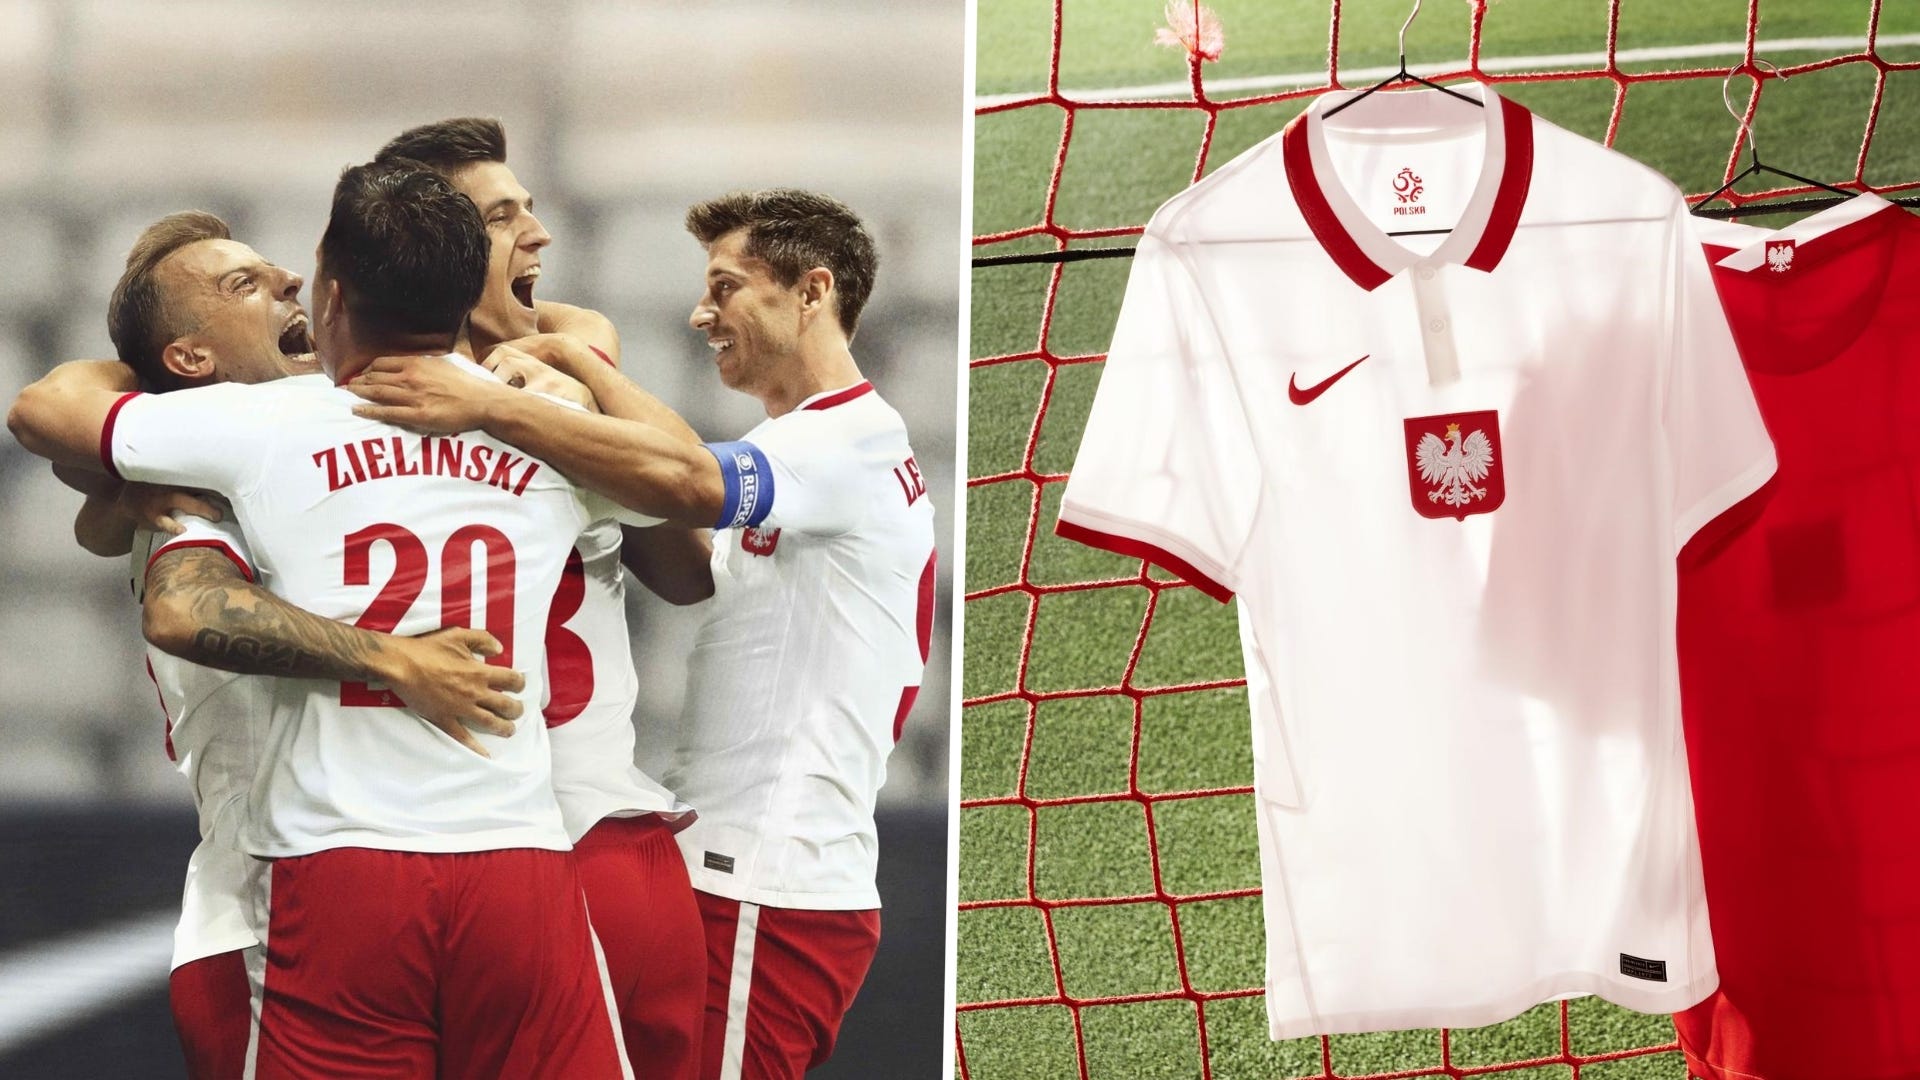 Retro Poland Jersey European Championship Poland soccer tournament fan shirt 2020 Euro Soccer 2020 Shirt Poland Pride Shirt